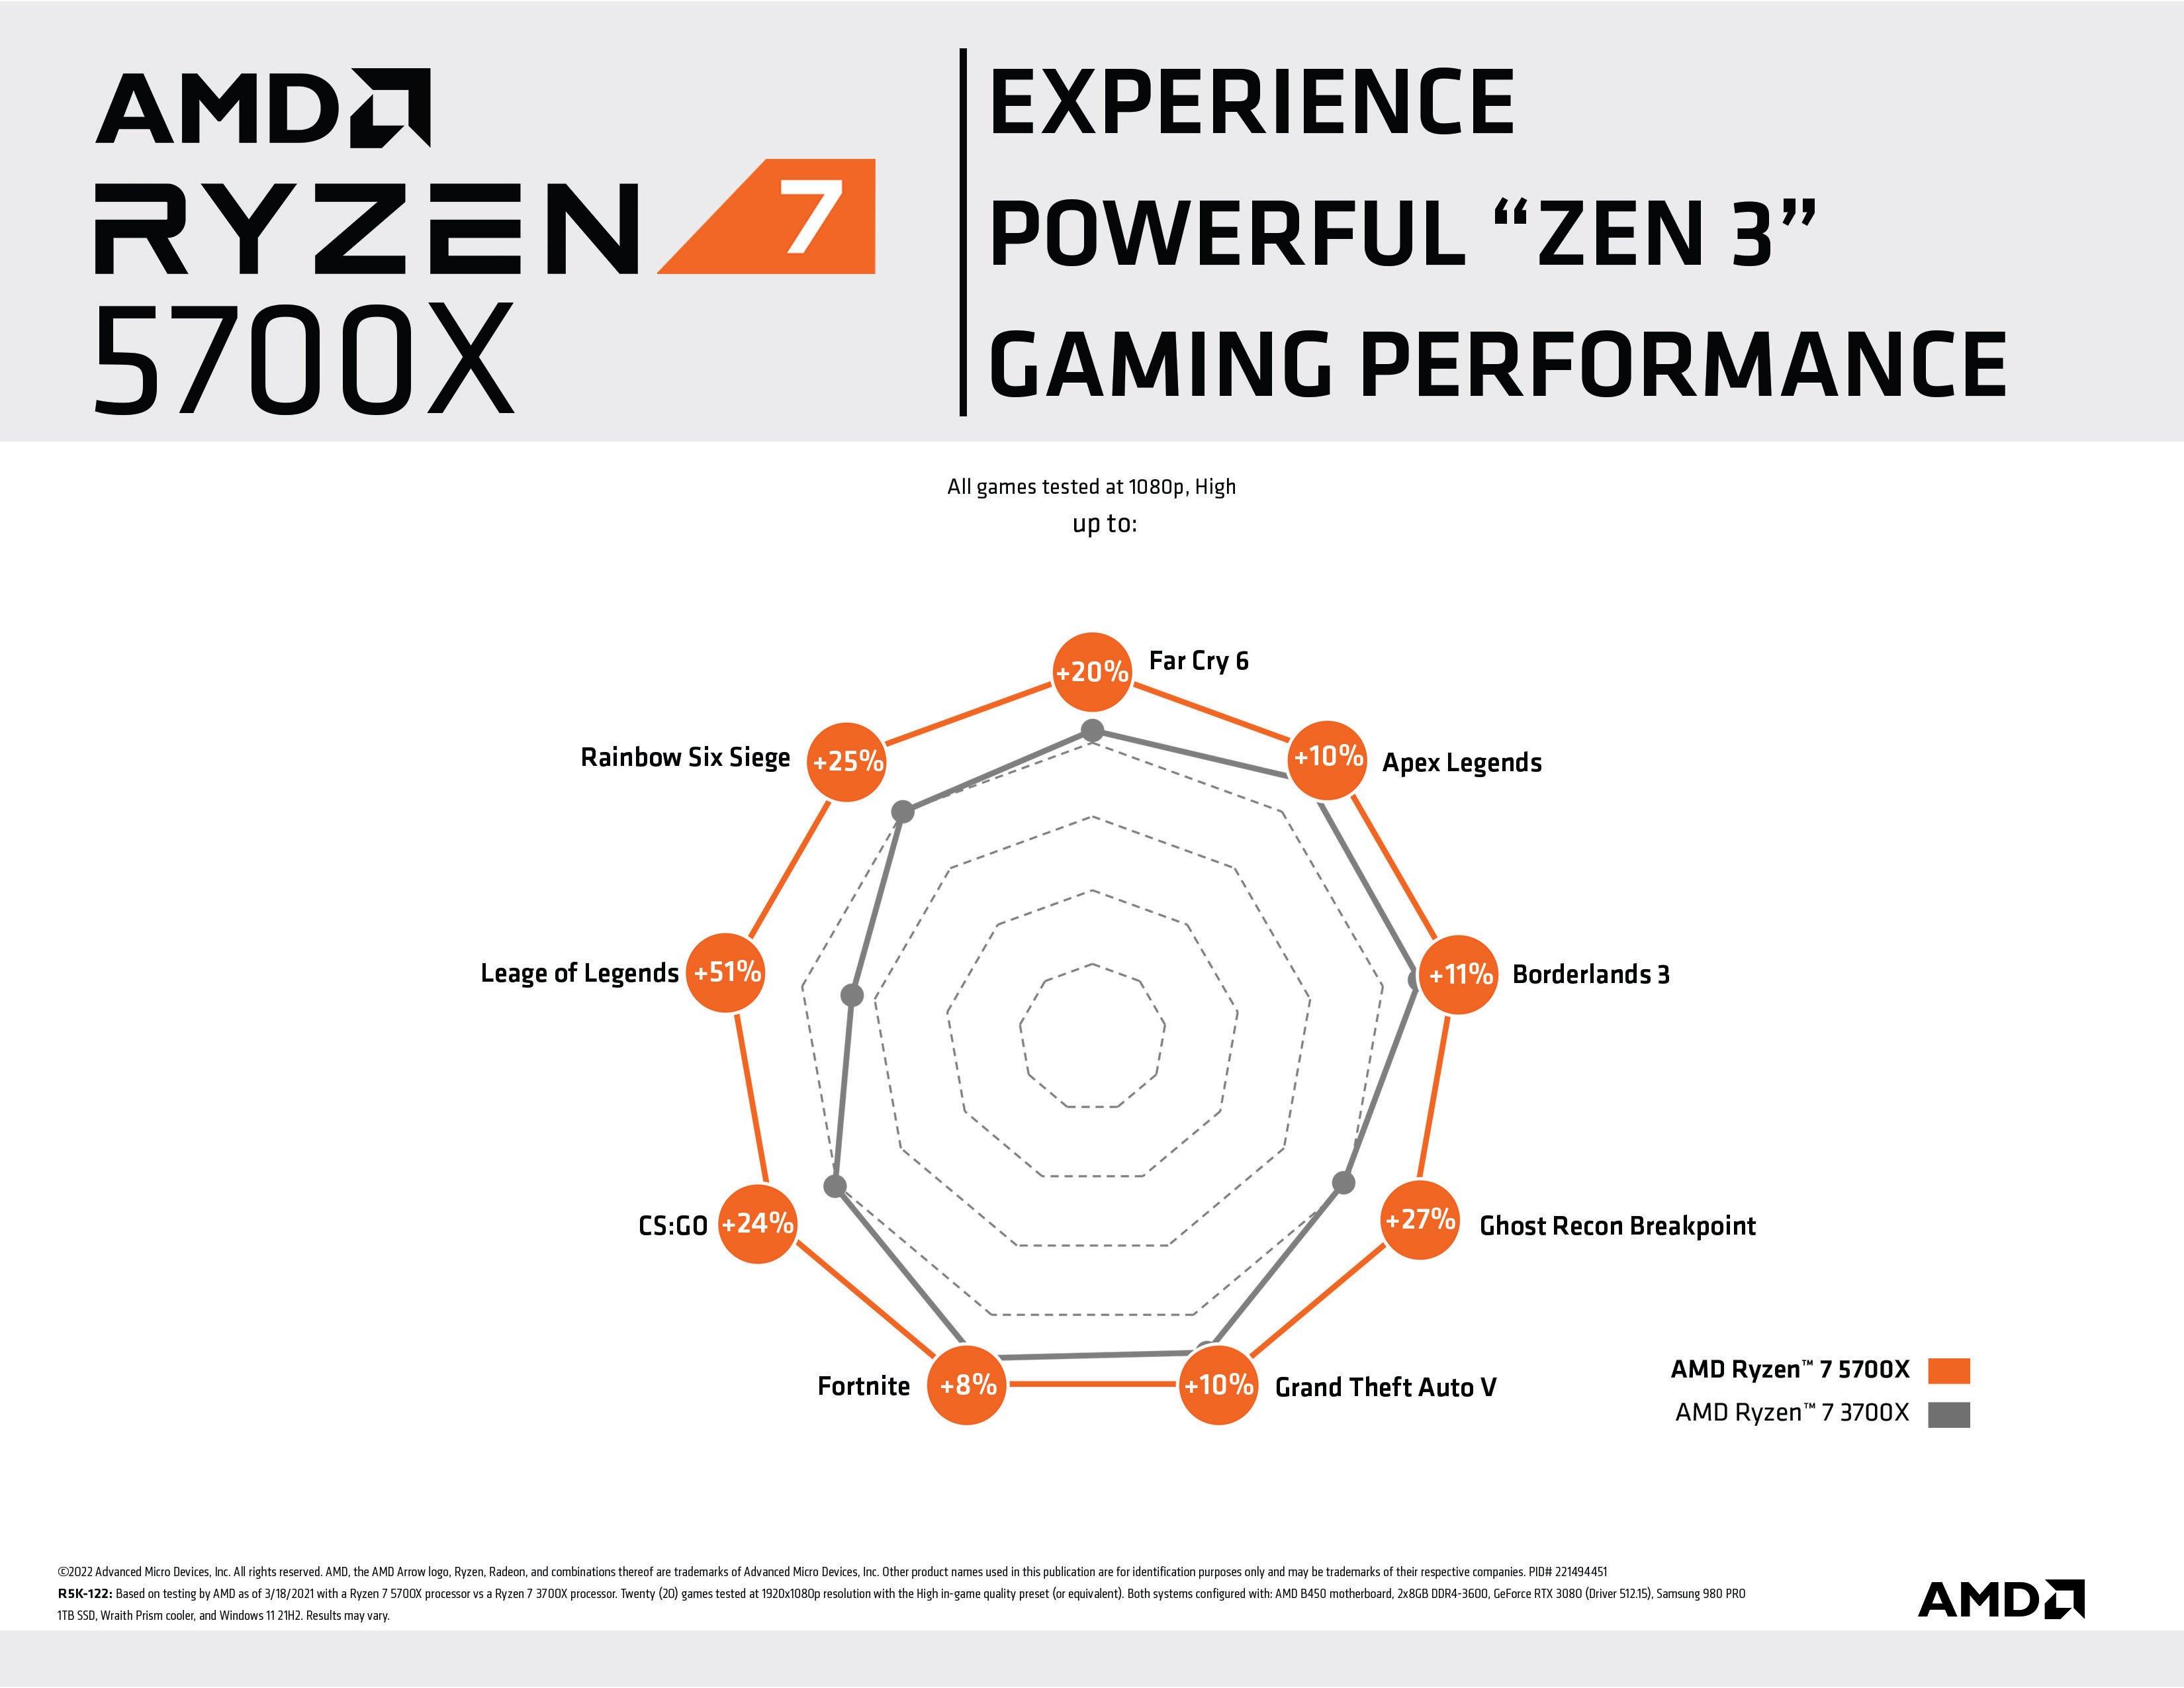 AMD Ryzen 7 5700X Review - Finally an Affordable 8-Core